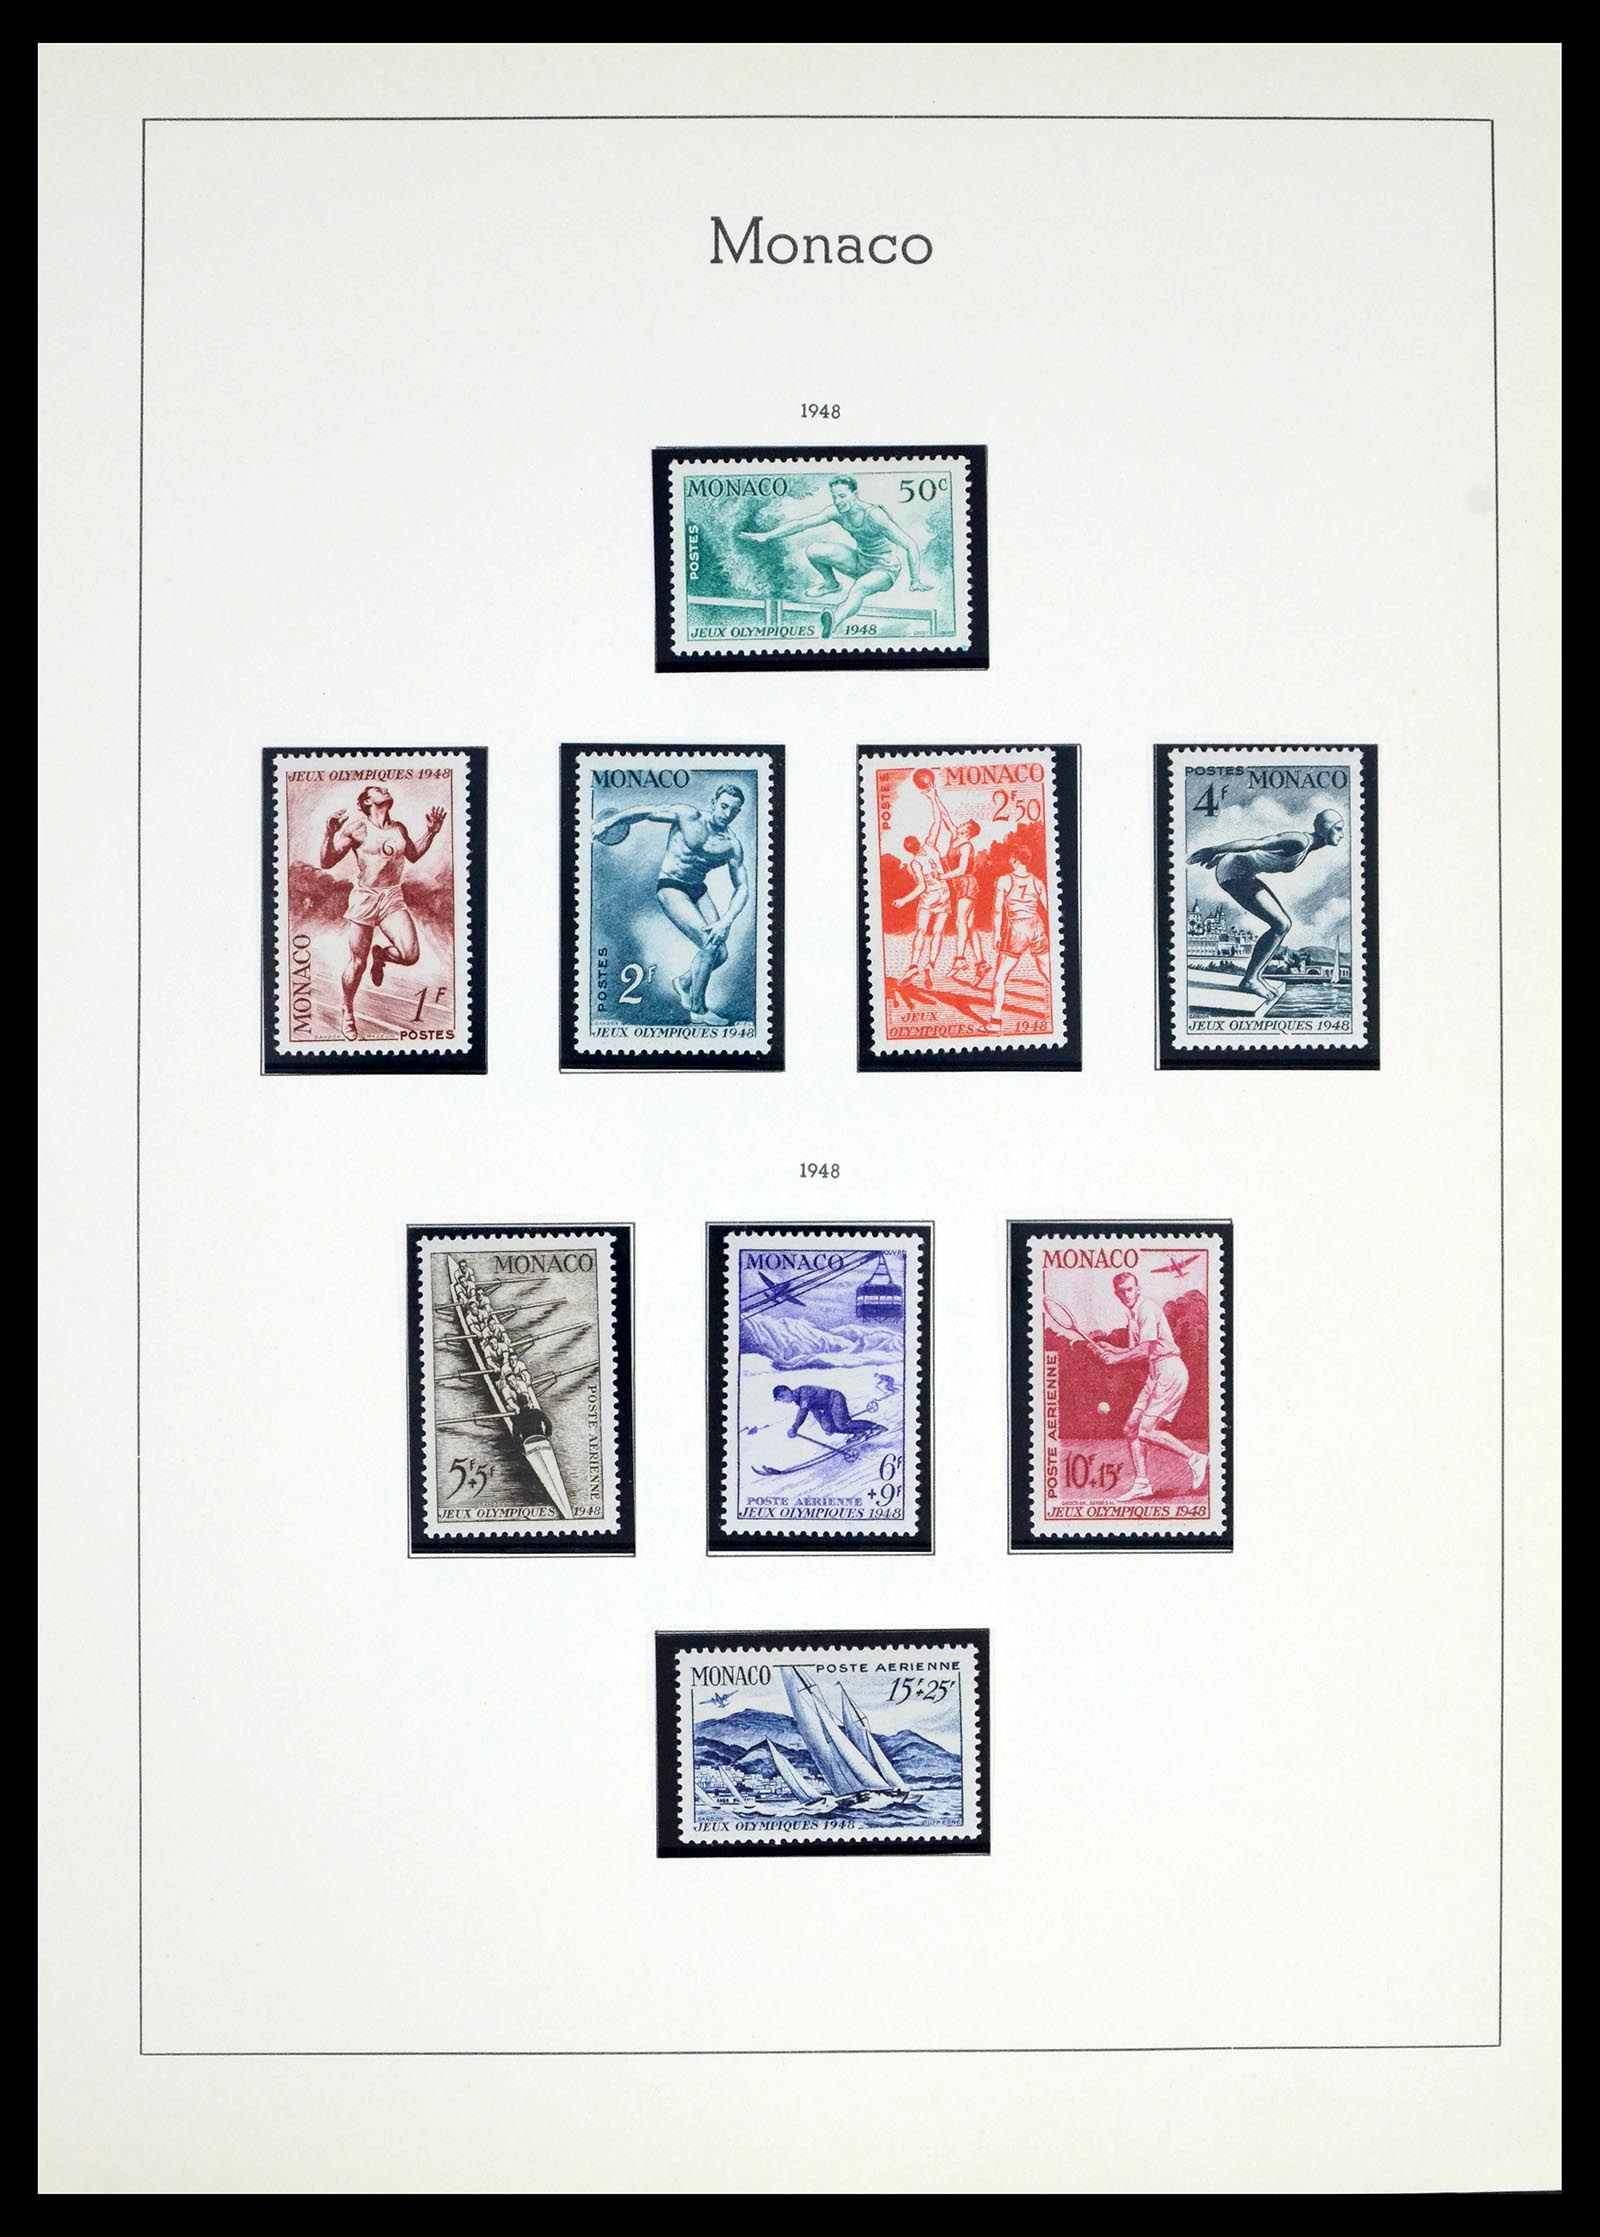 39392 0029 - Stamp collection 39392 Monaco 1885-1999.